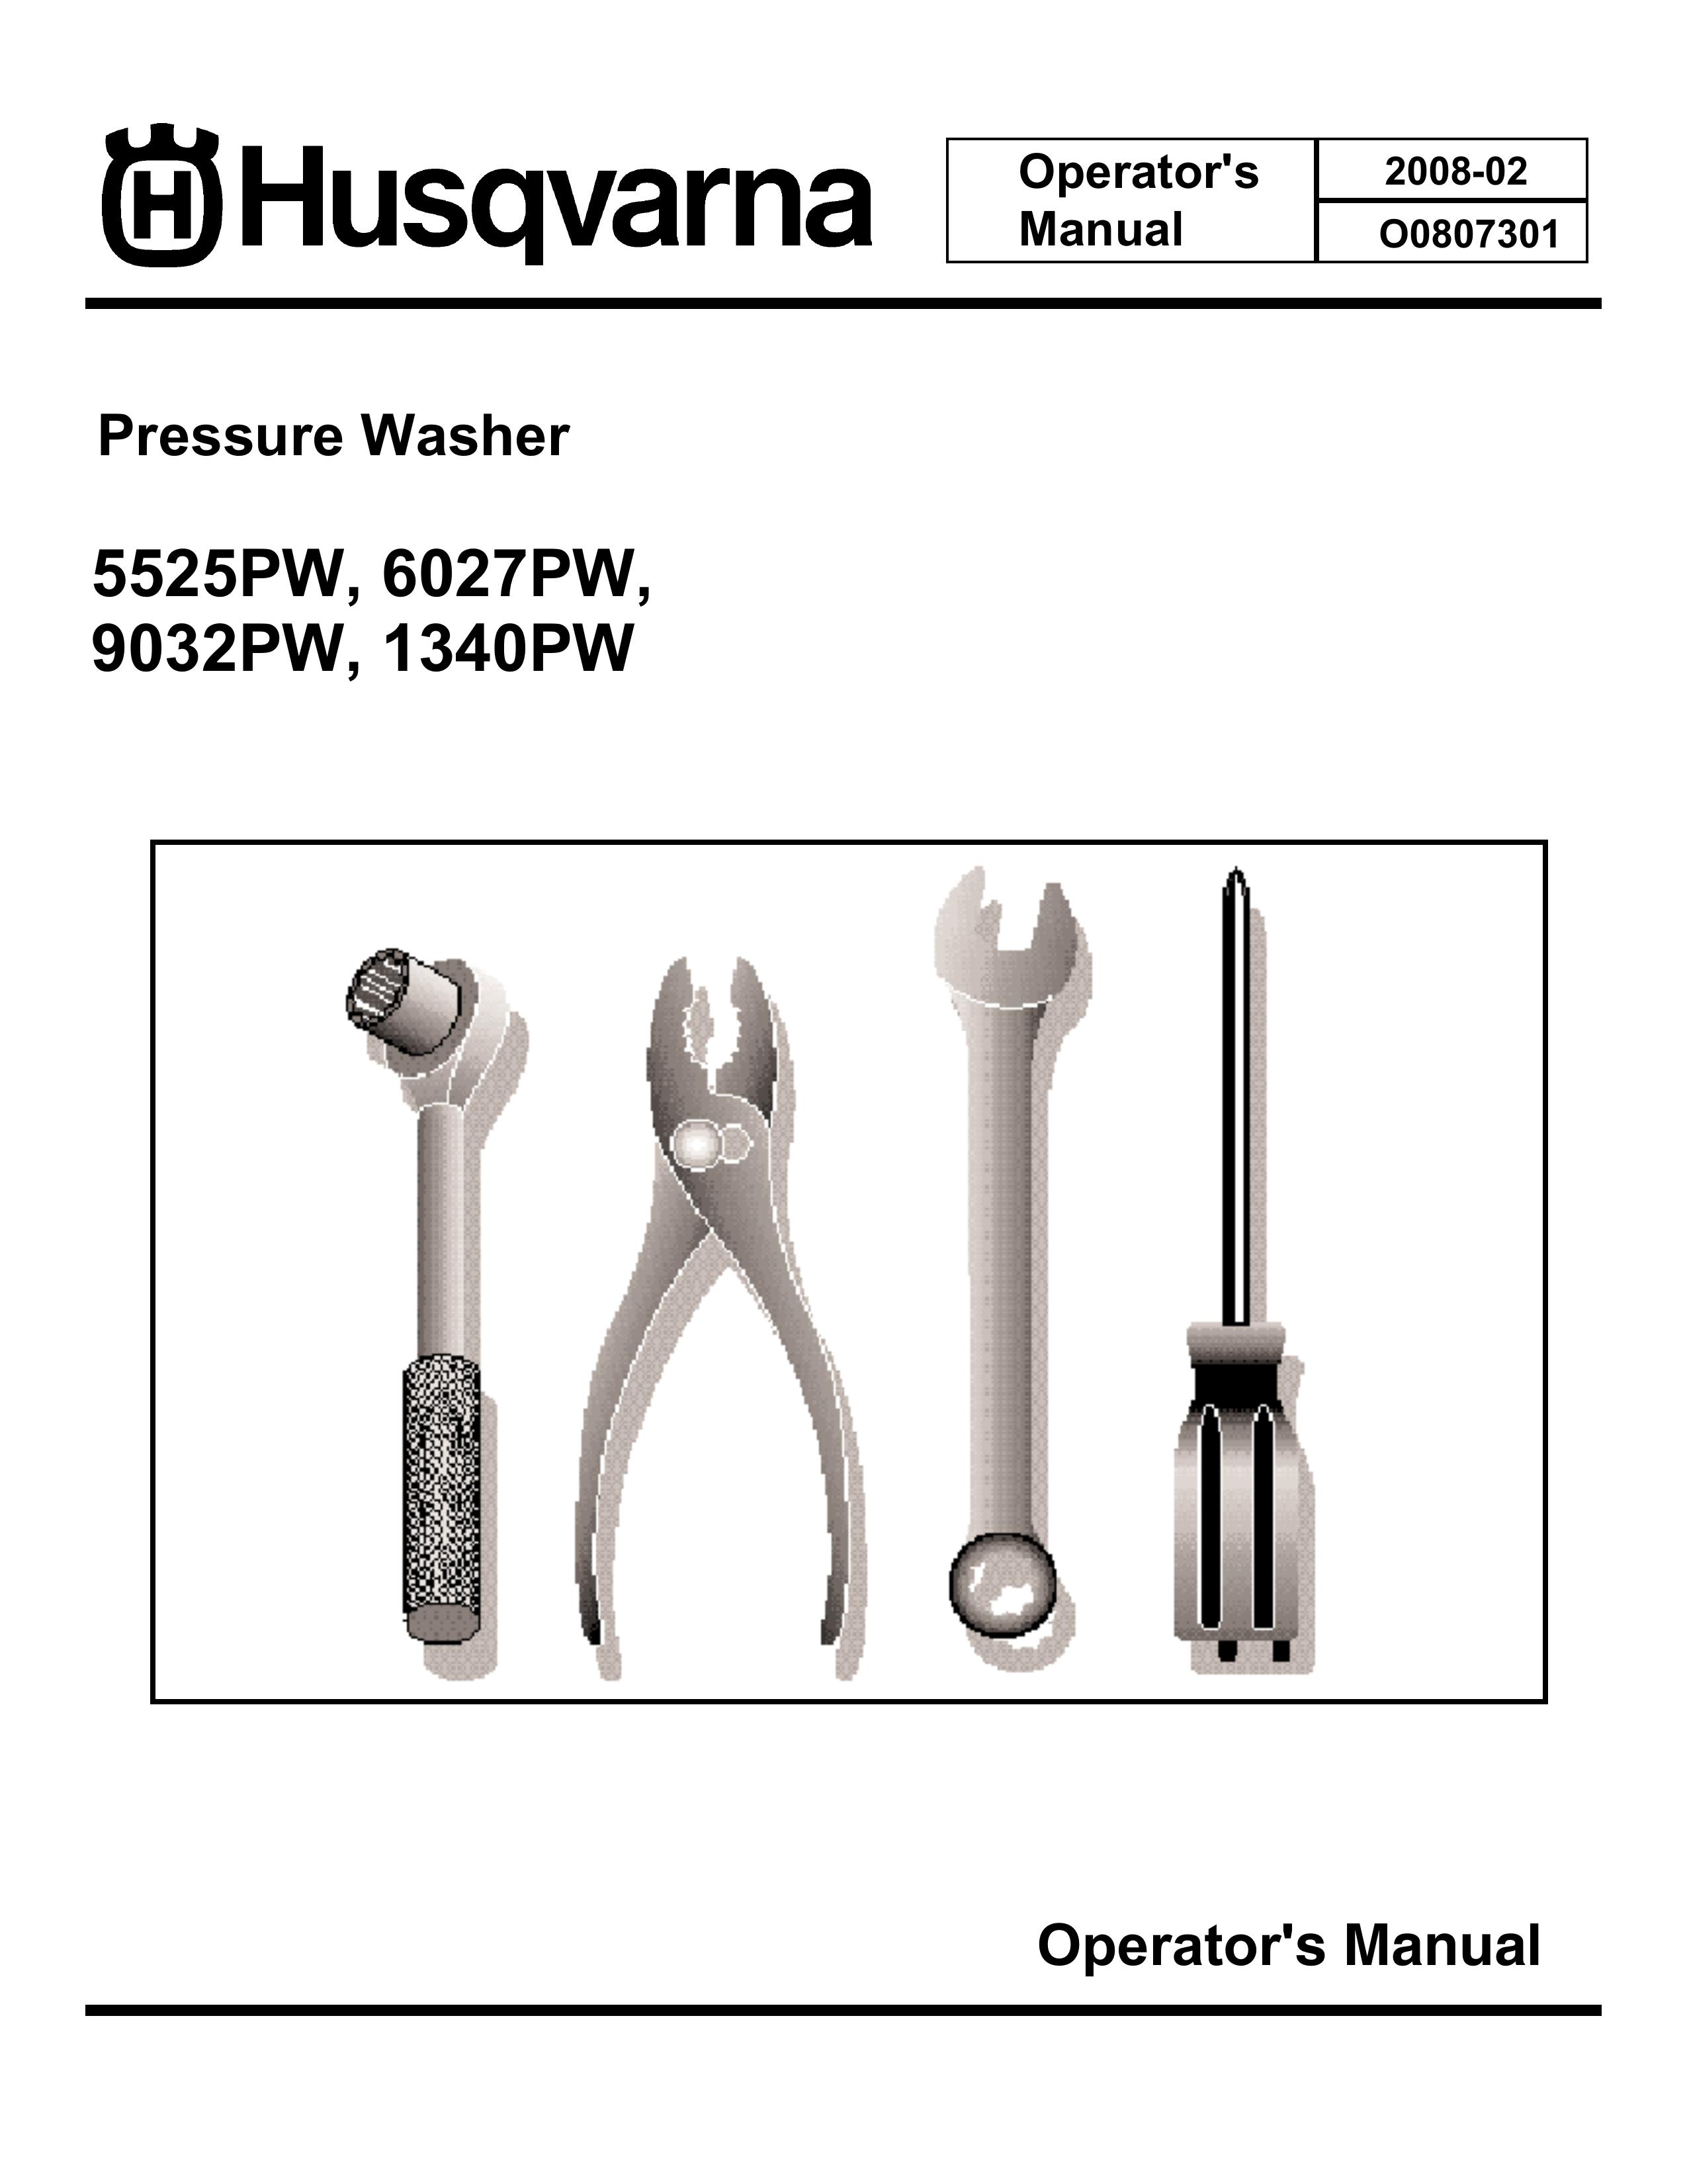 Husqvarna 9032PW Pressure Washer User Manual